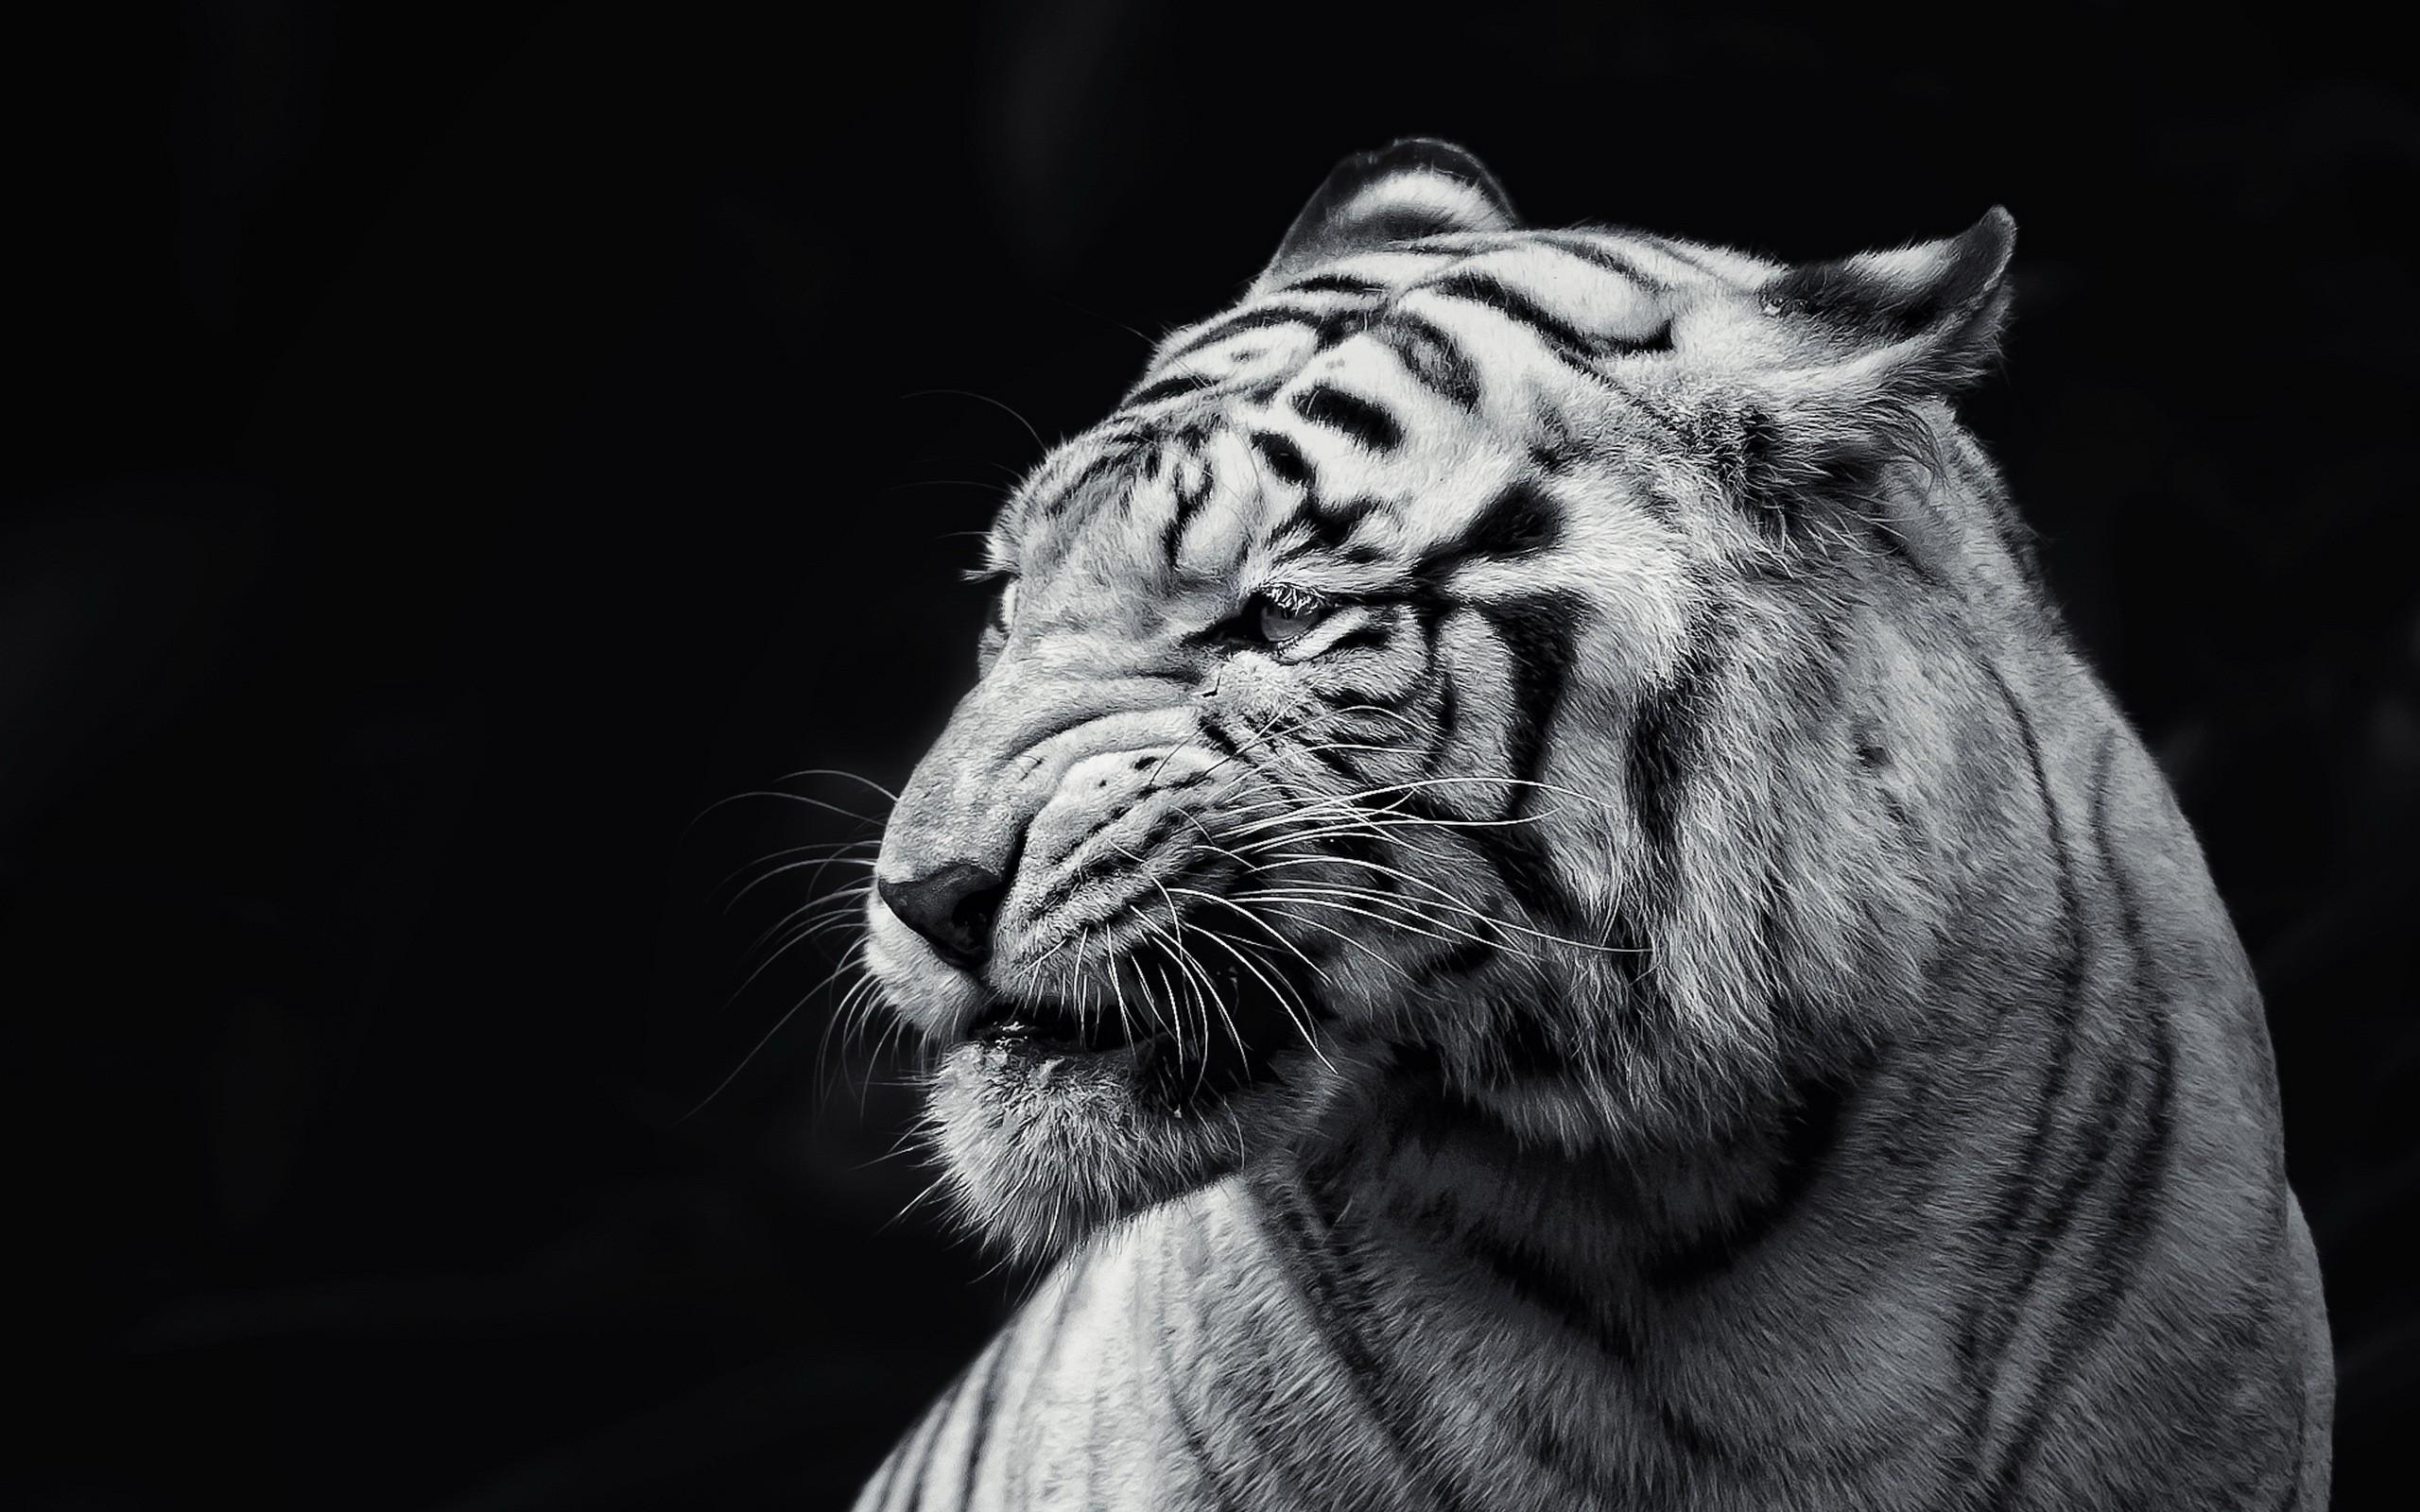 Black And White Tiger Jpg Image Jpeg Pixels